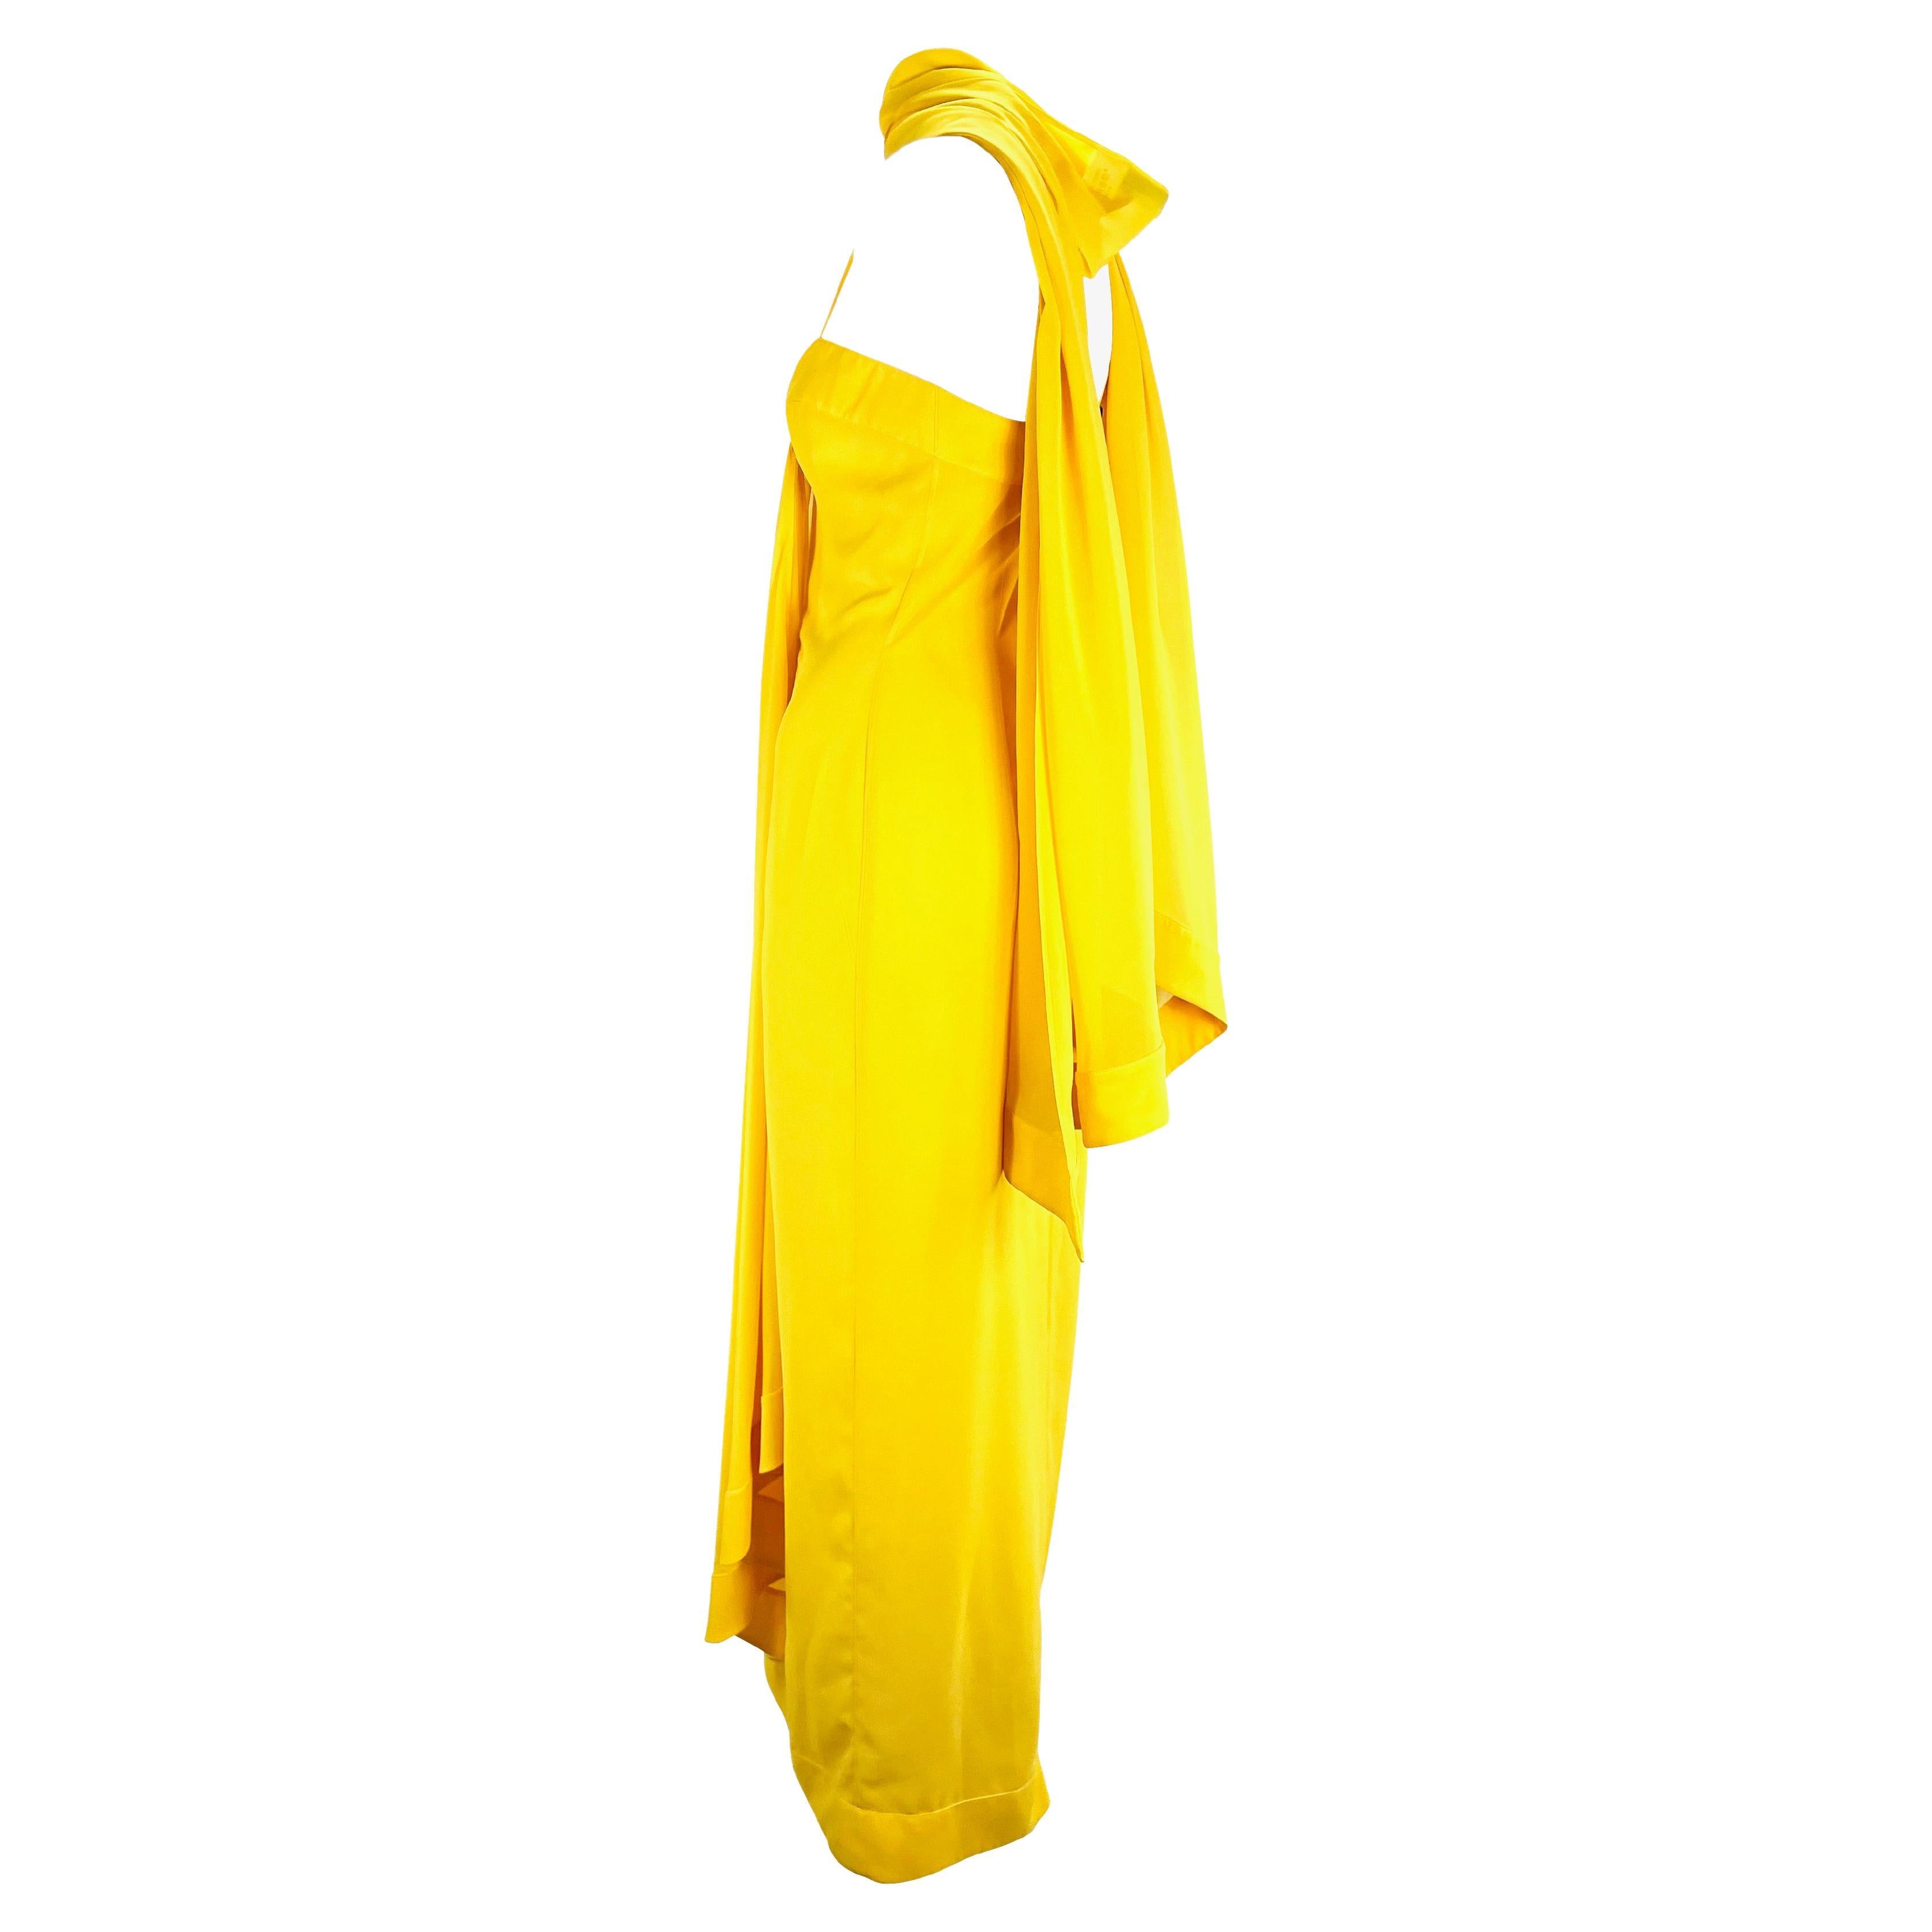 S/S 2000 Thierry Mugler Canary Yellow Chiffon Dress with Matching Shawl For Sale 5